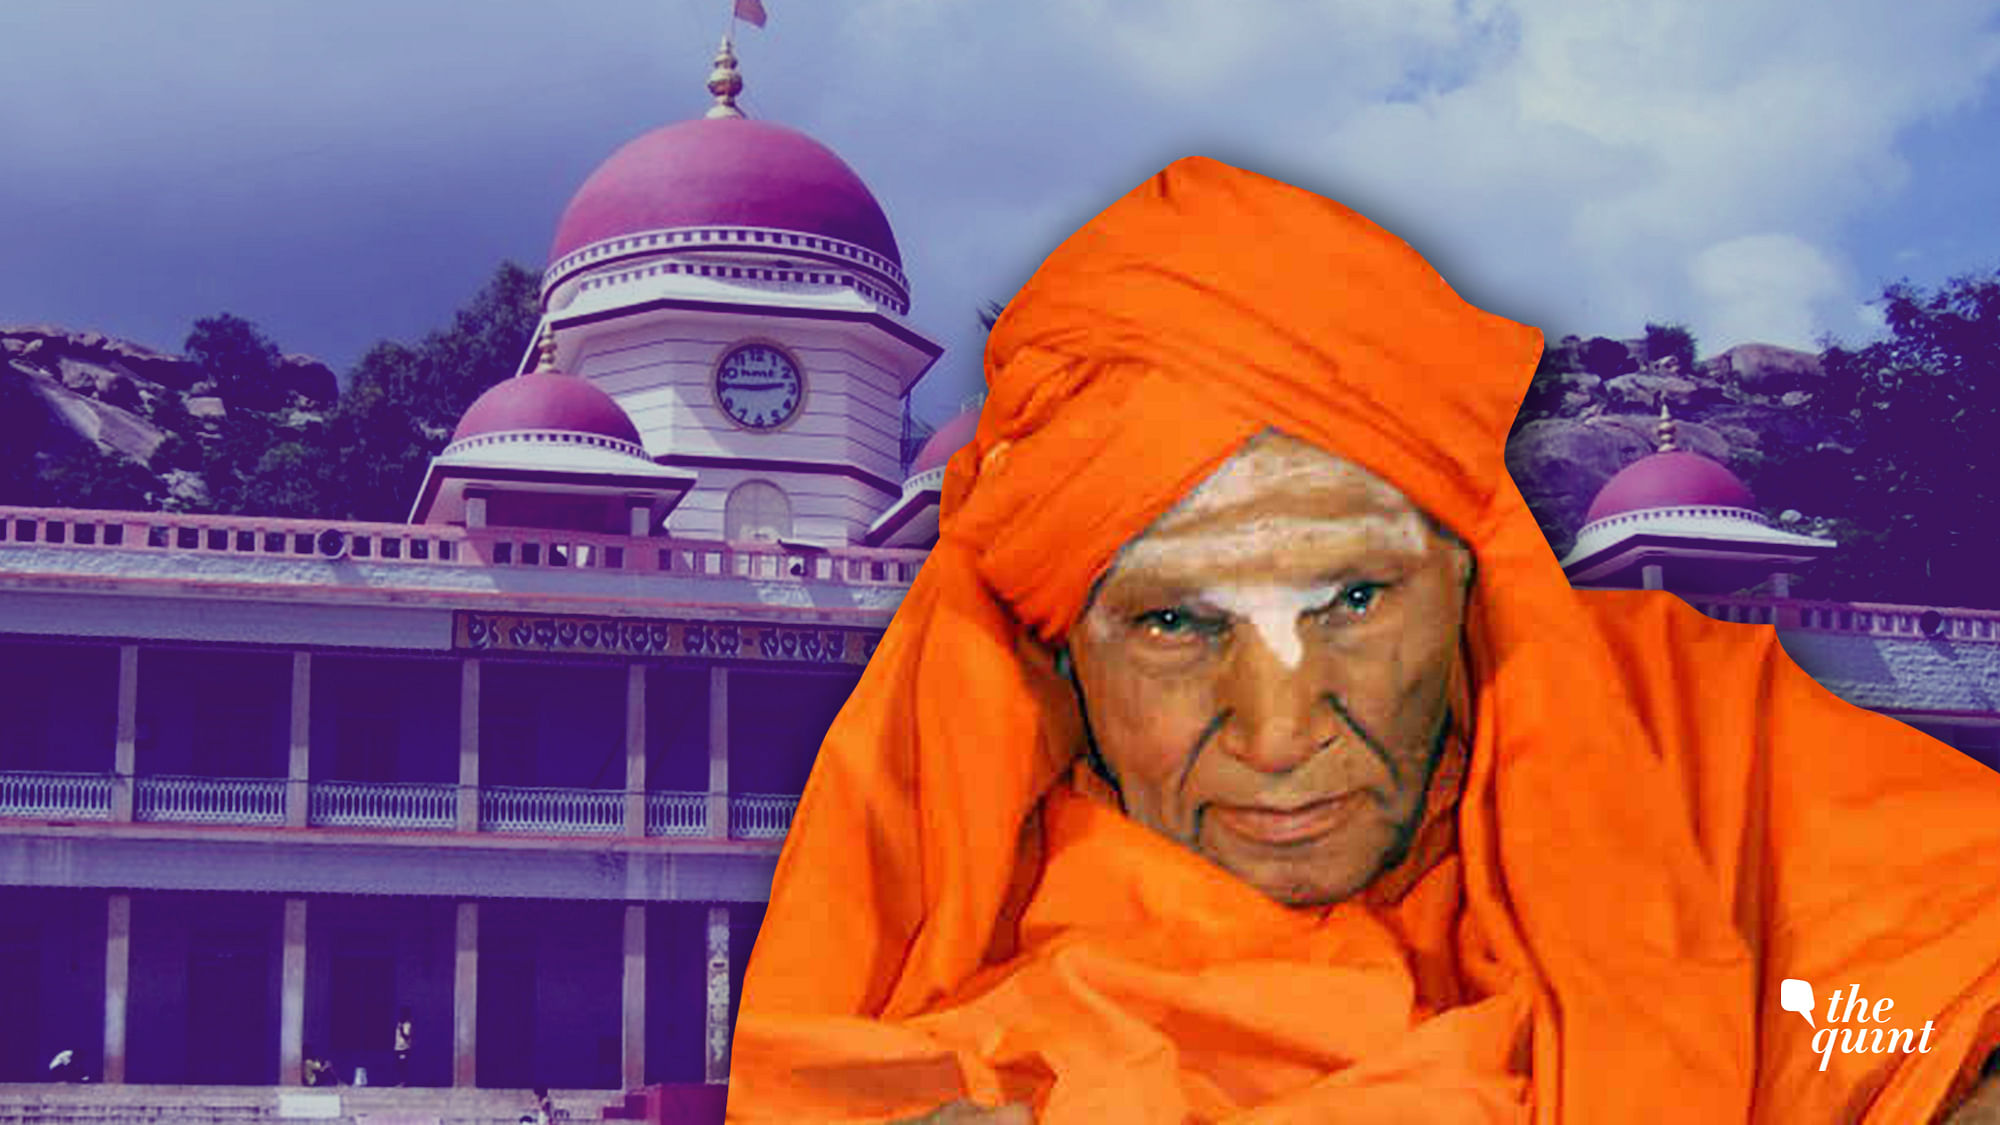 Shivakumara Swami passed away at the age of 111 on 21 January.